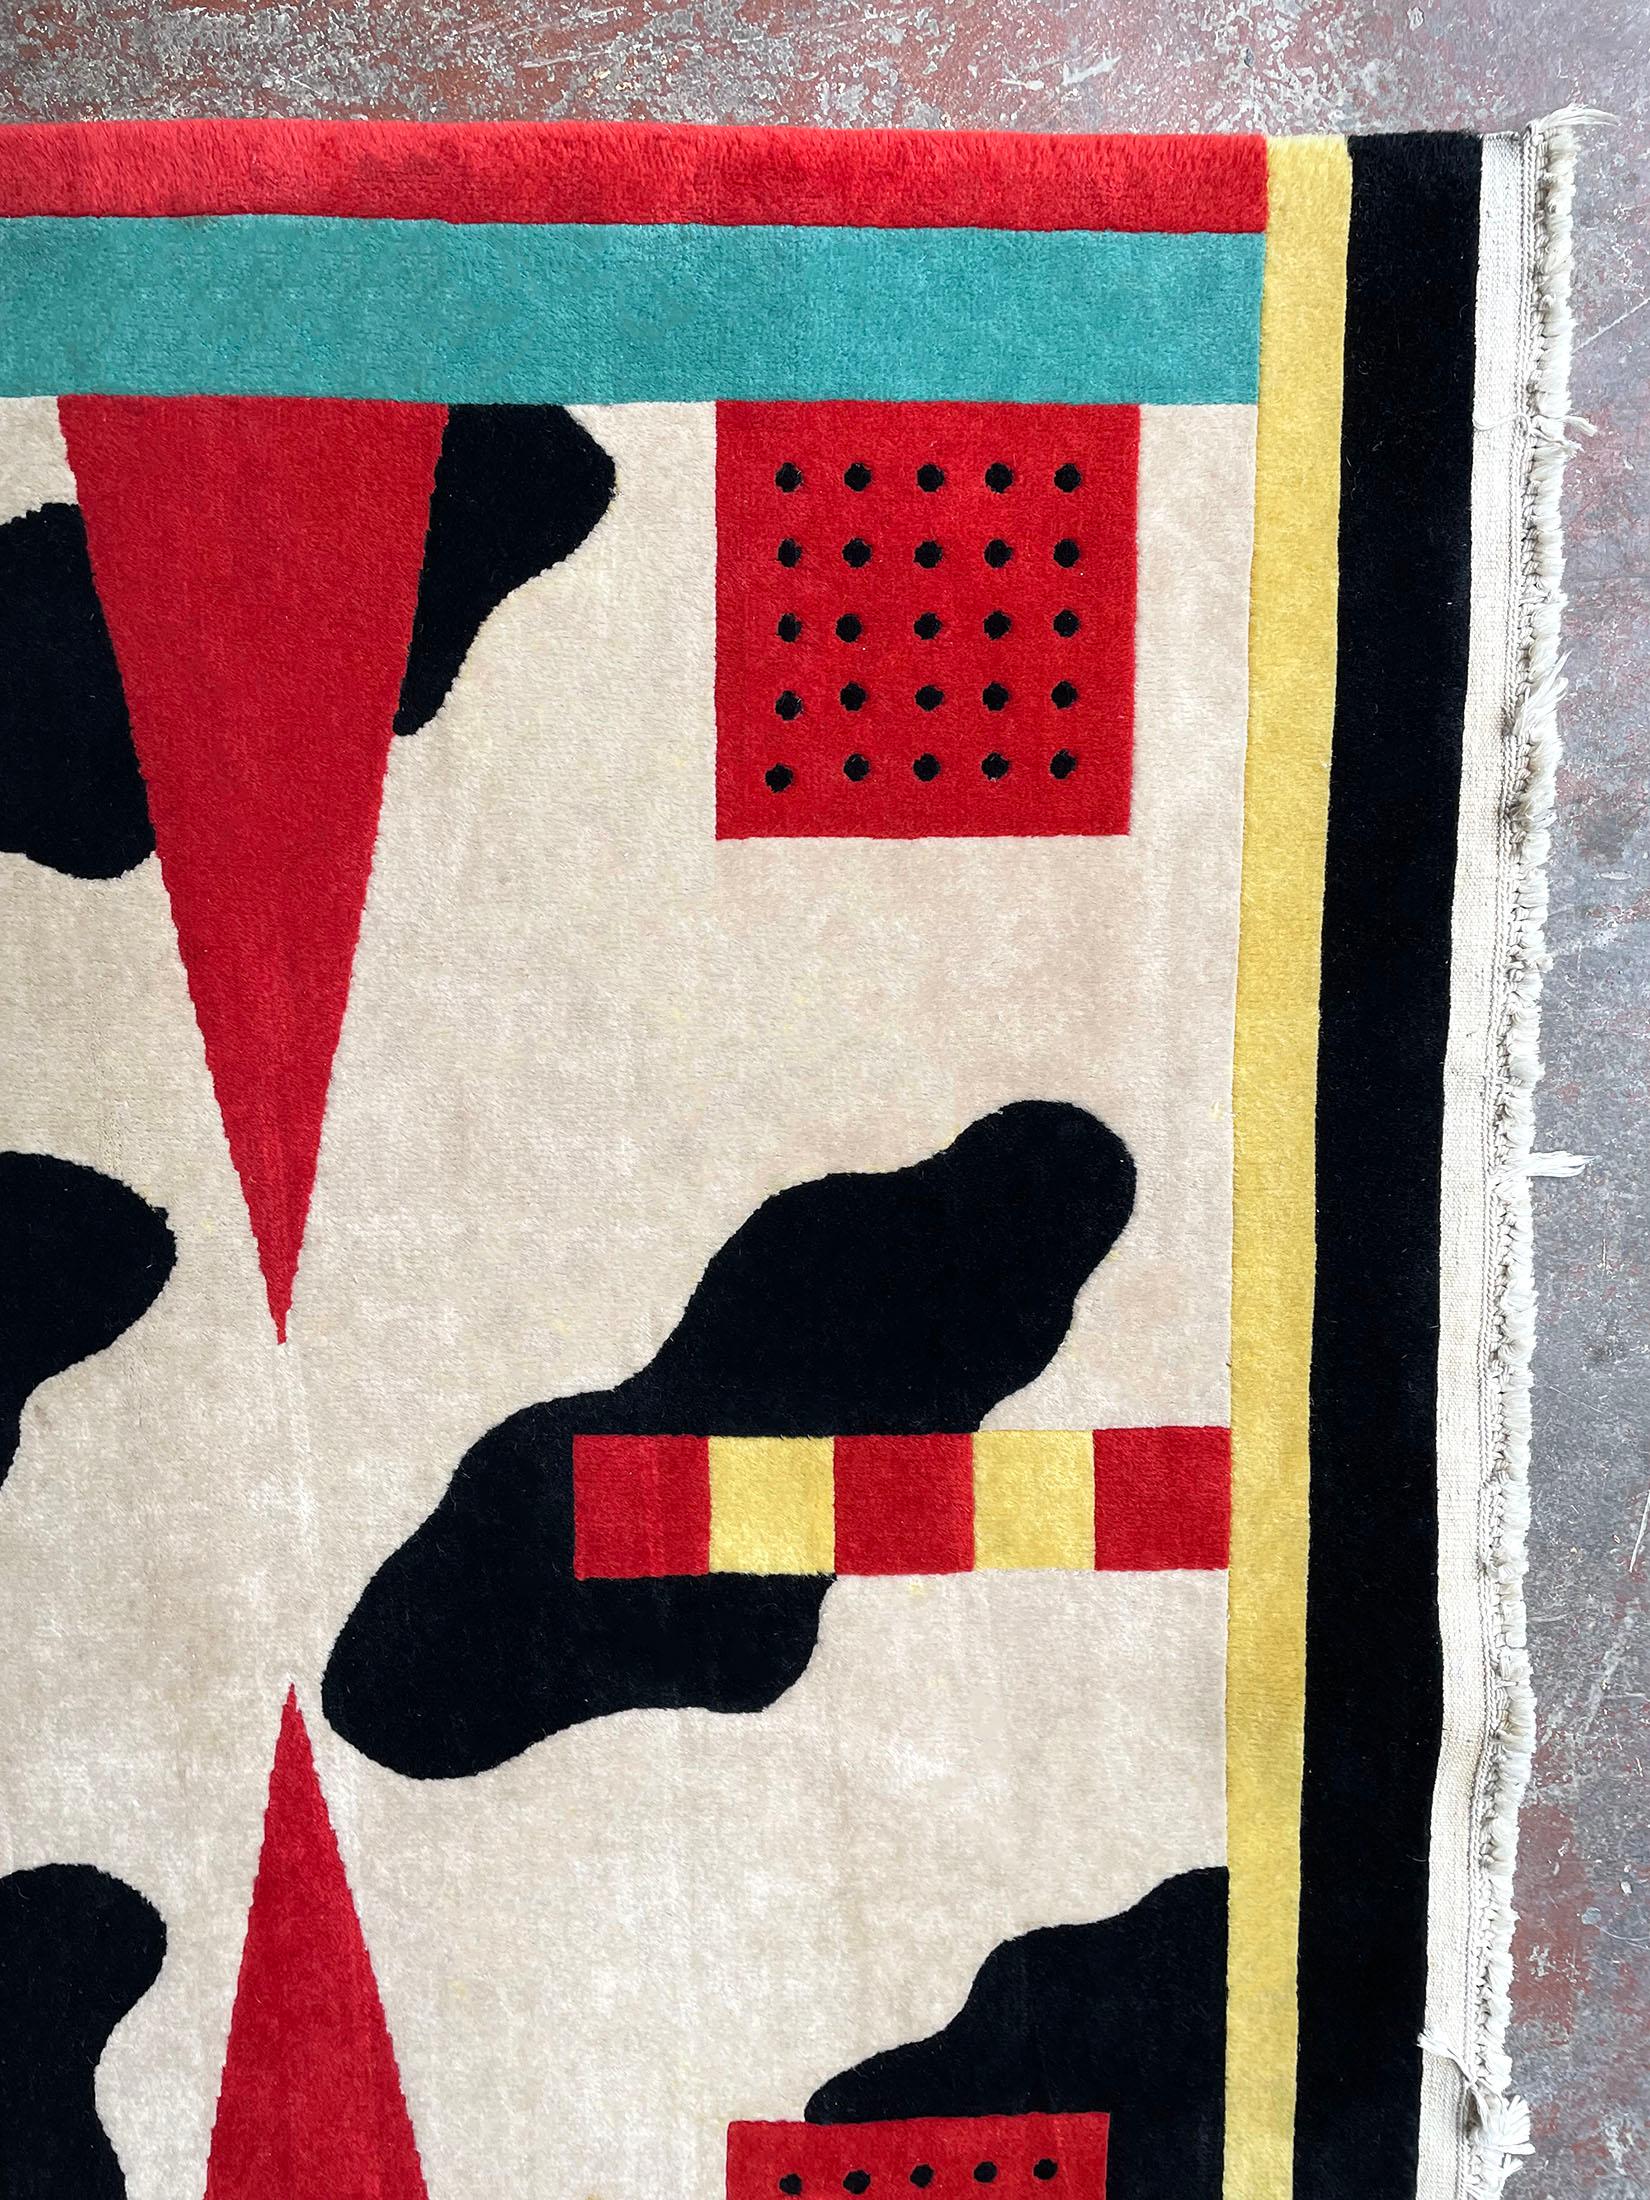 Post-Modern California Carpet Designed in 1983 by Nathalie du Pasquier for Memphis Milano